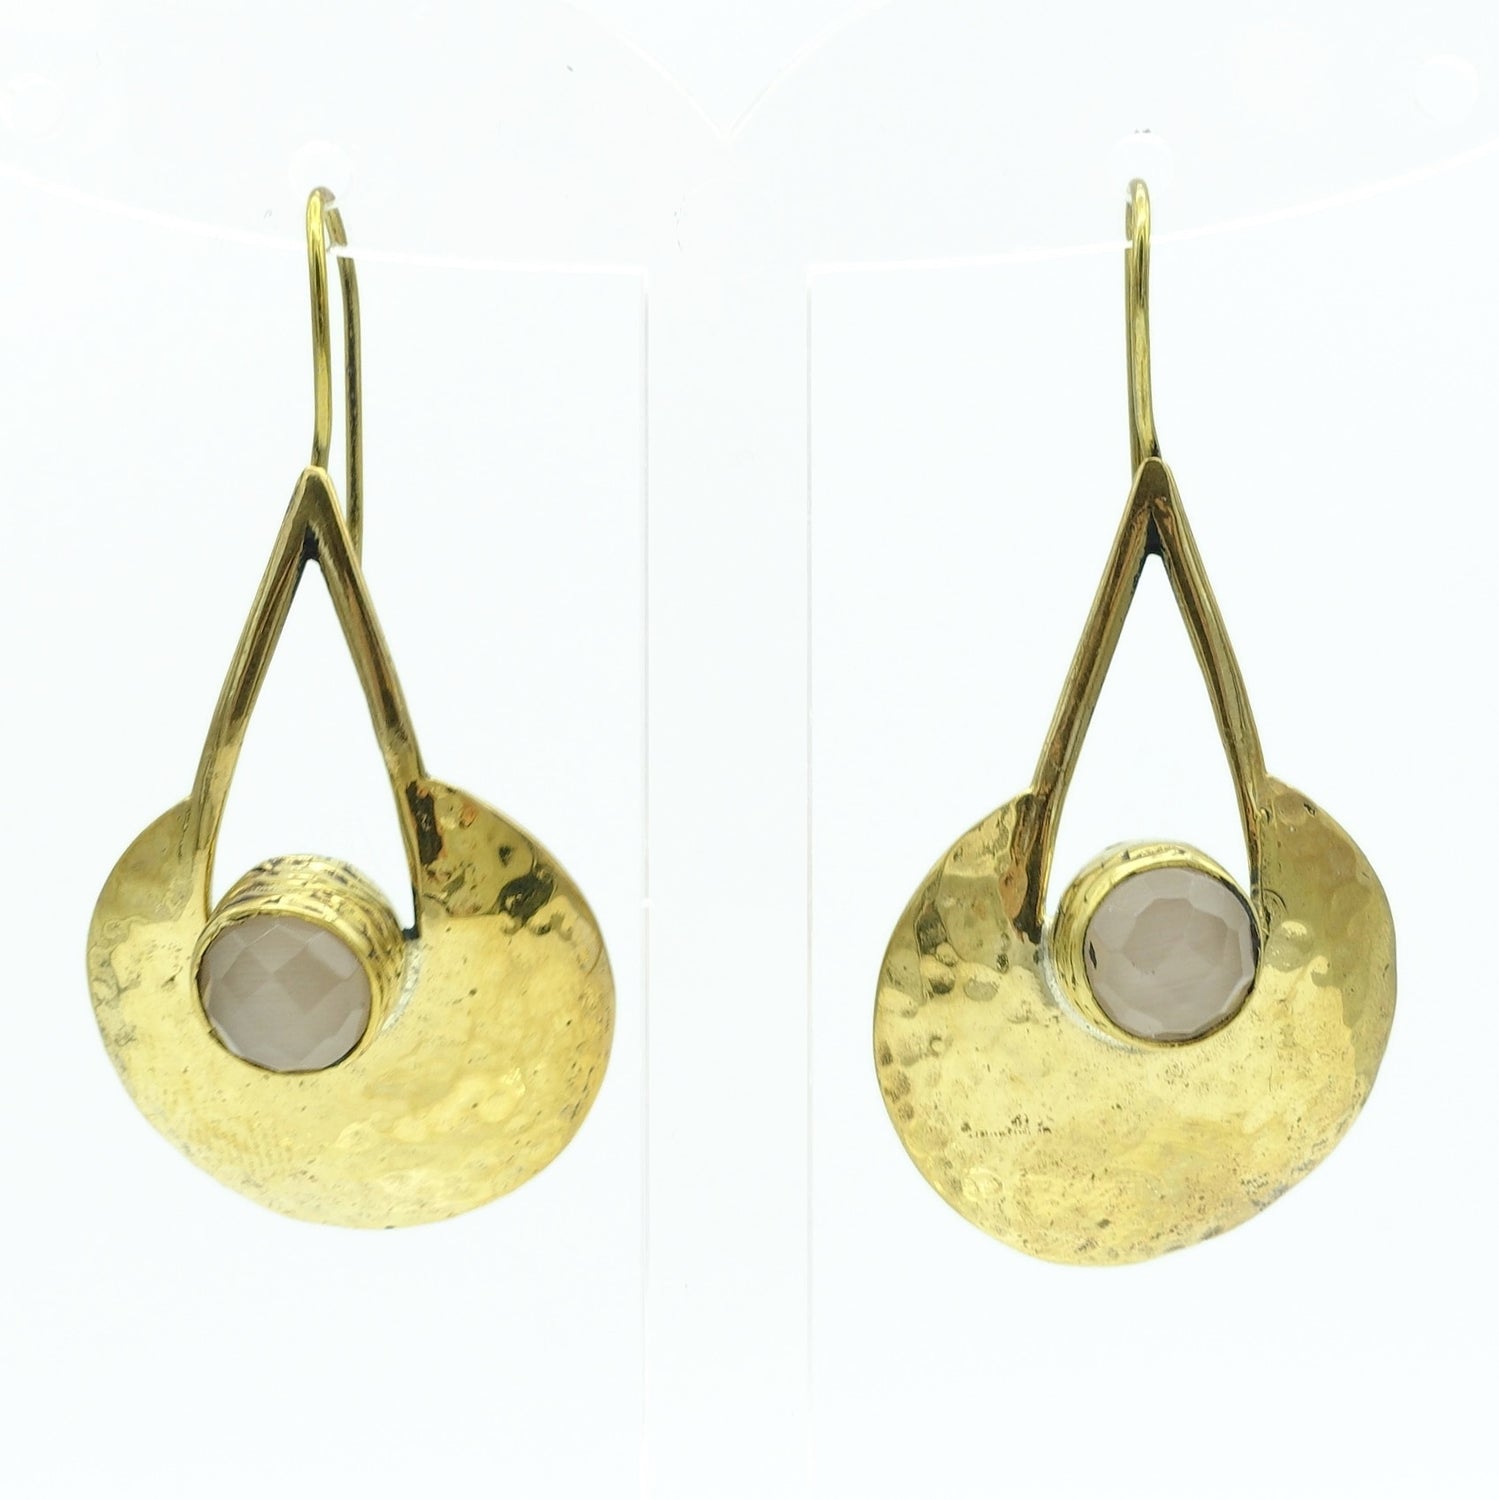 Aylas  Cat eye Hammered earrings 21ct Gold plated semi precious gemstone - Handmade